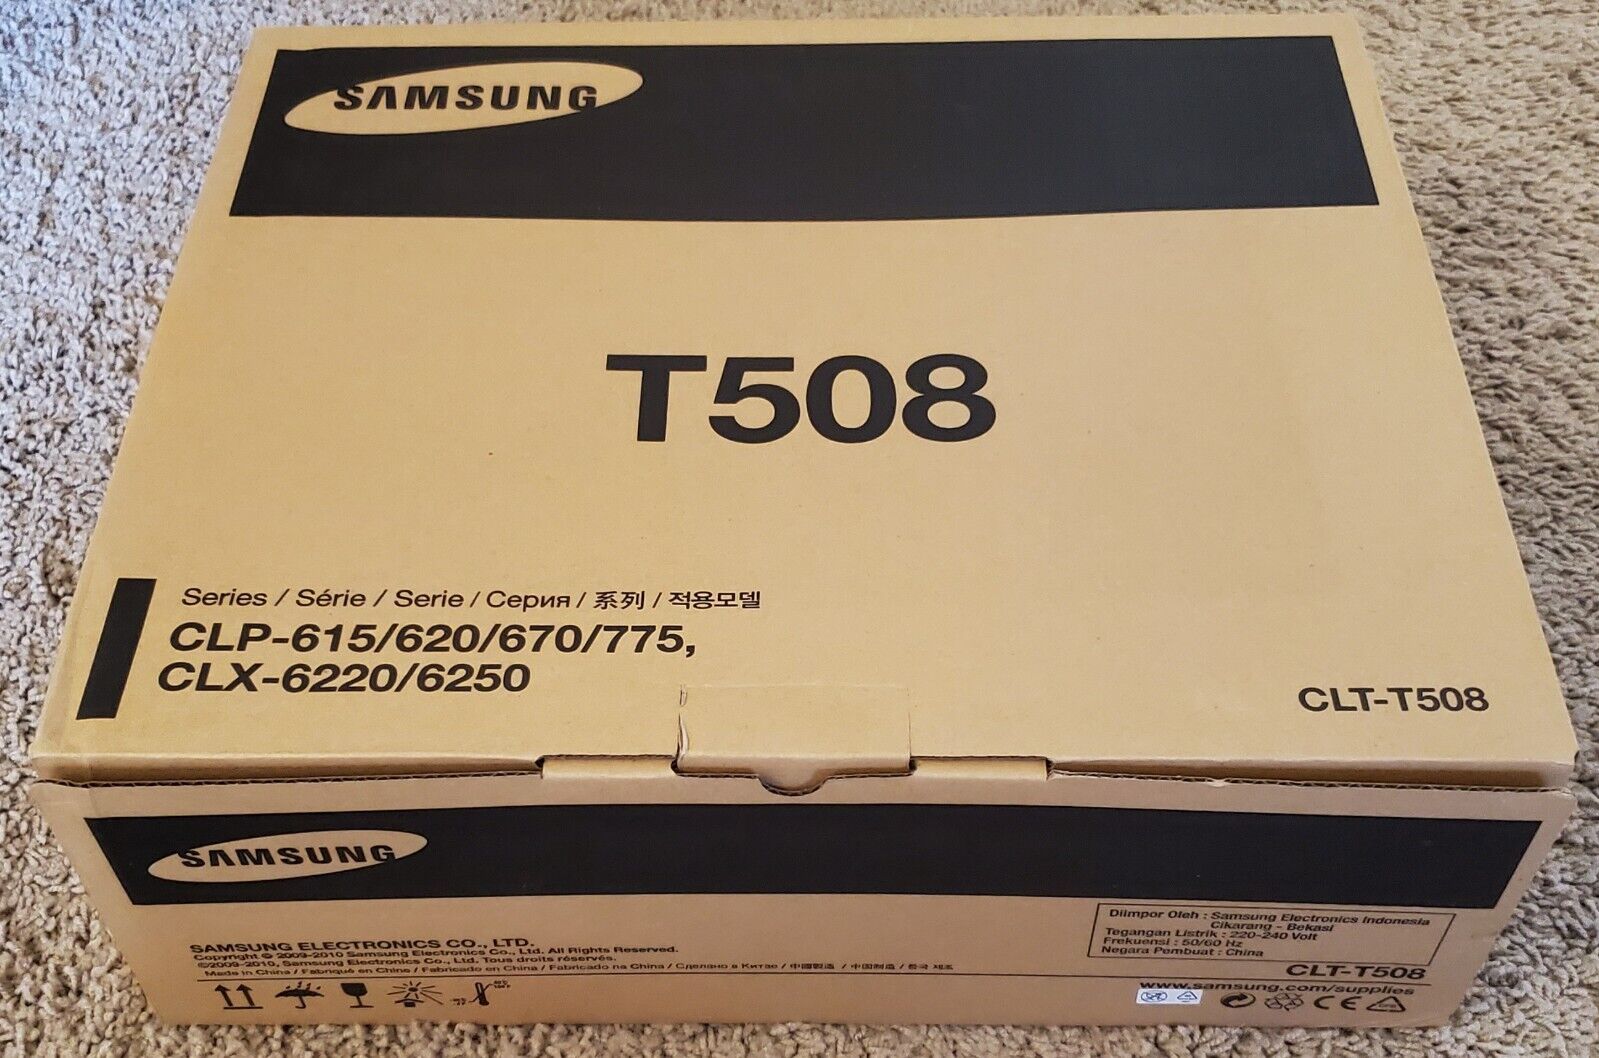 NEW Genuine Samsung T508 Image Transfer Belt CLP-620/670, CLX-6220 CLT-T508/SEE